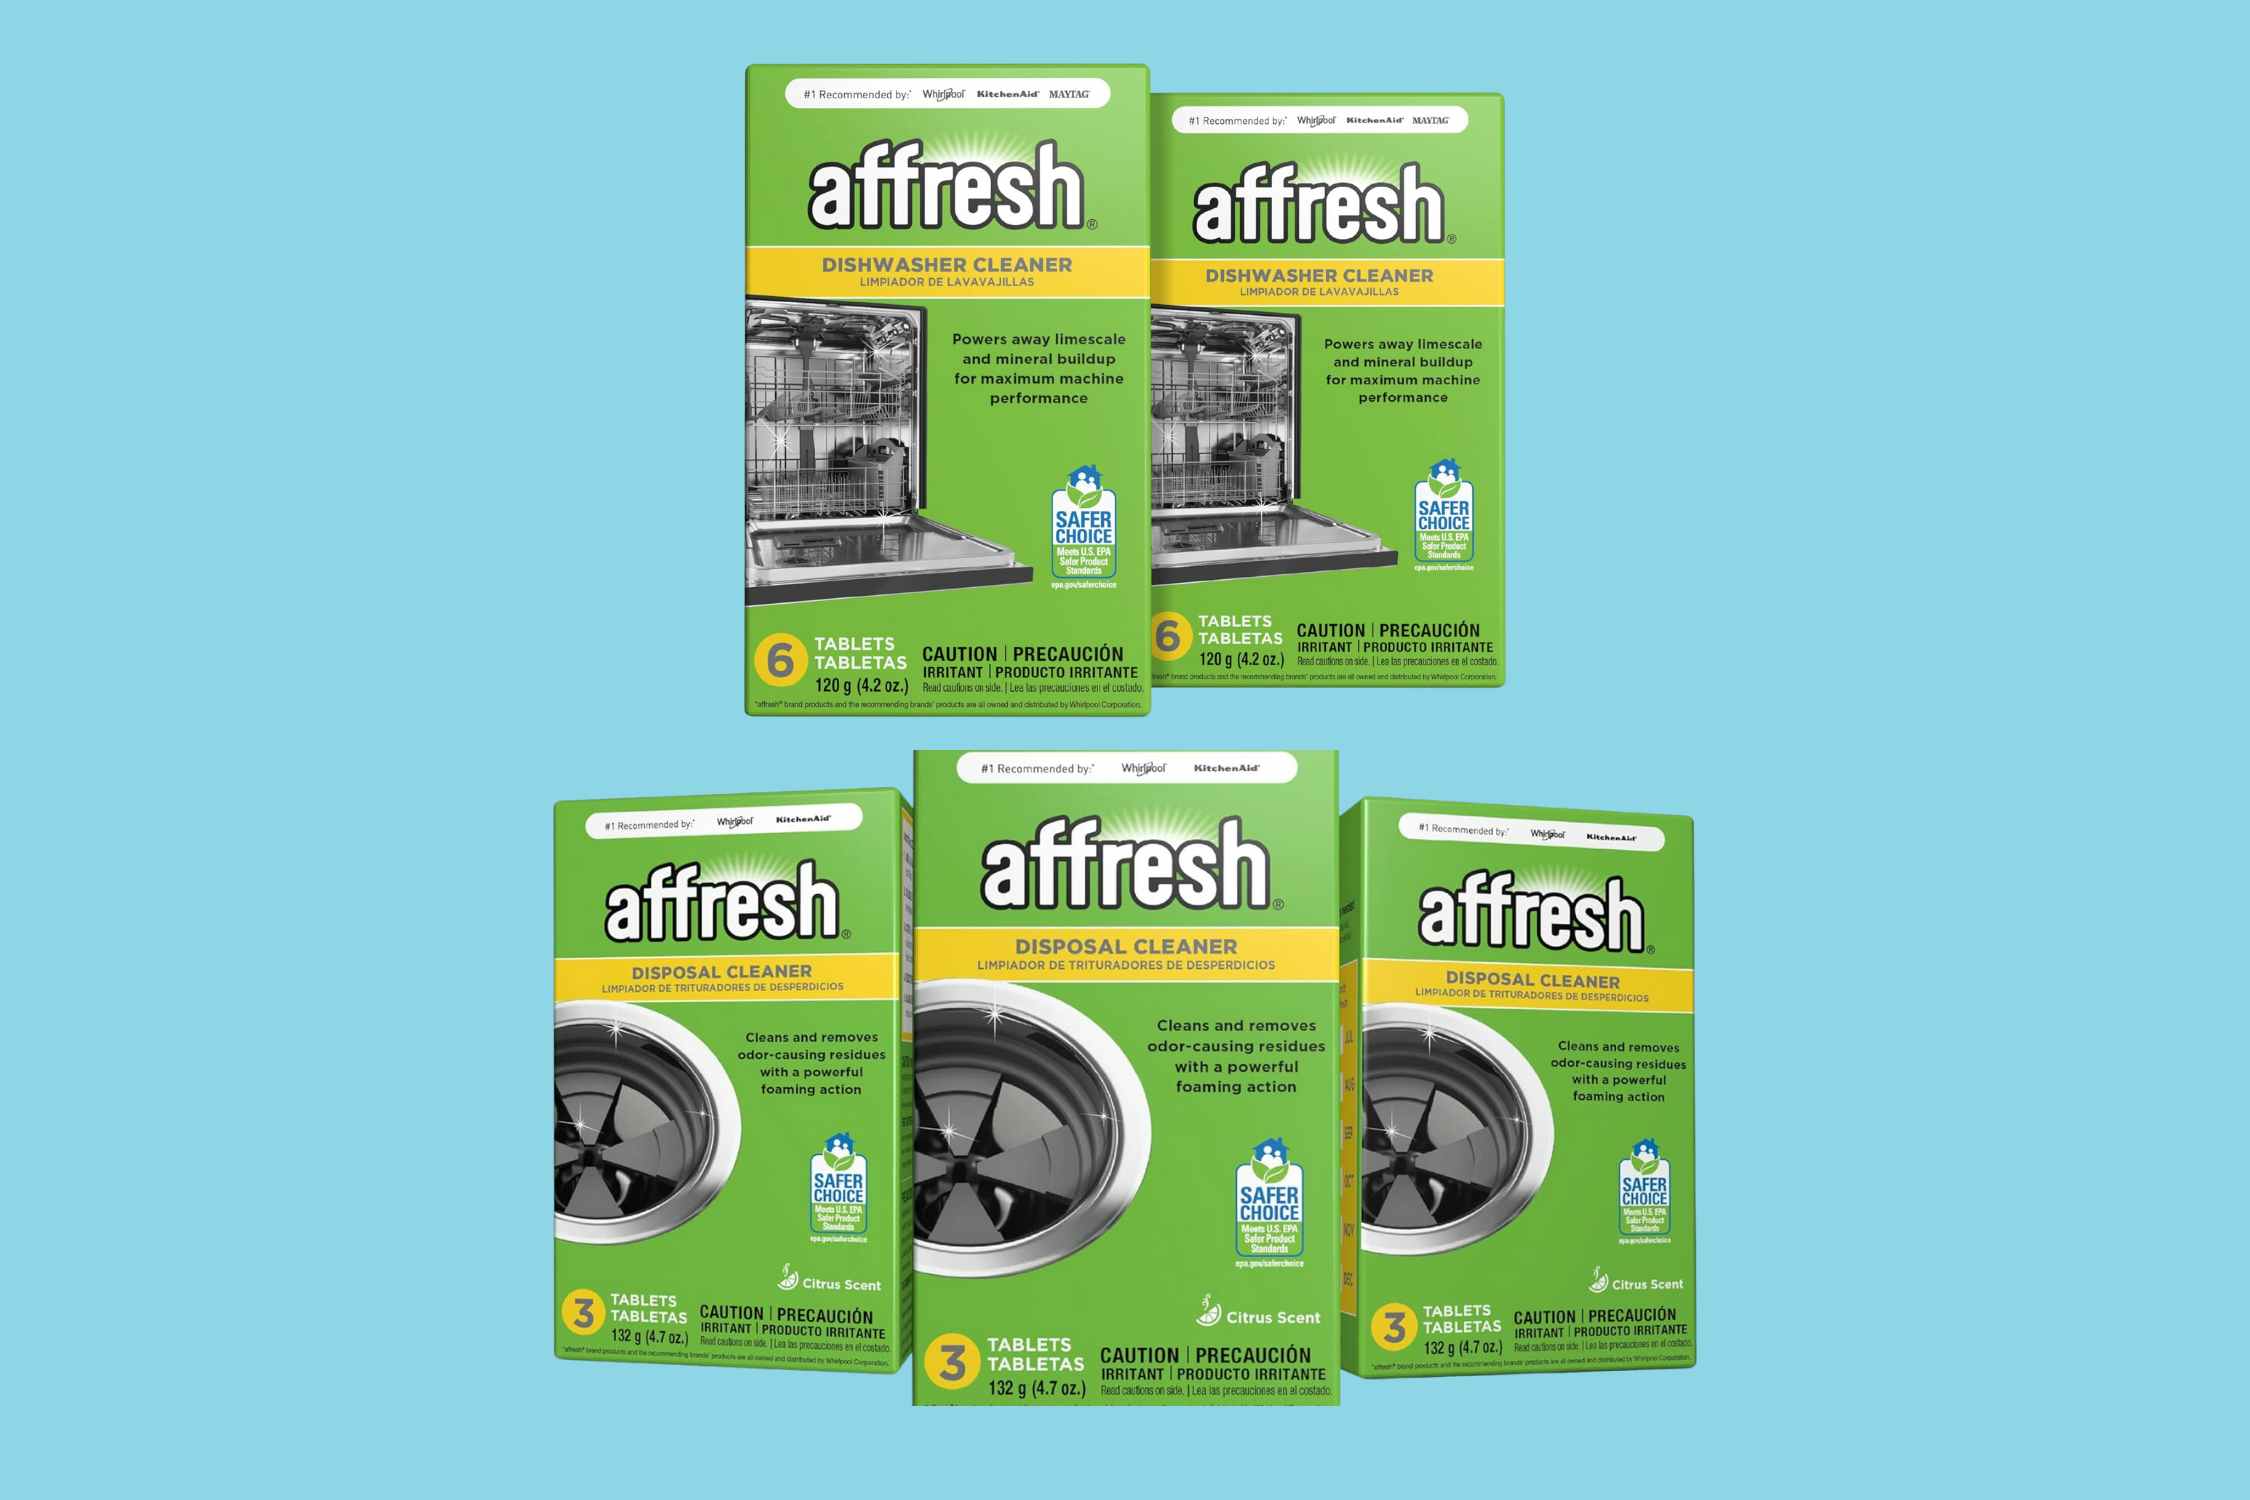 Affresh Garbage Disposable and Dishwasher Cleaner Bundle, $11.71 on Amazon